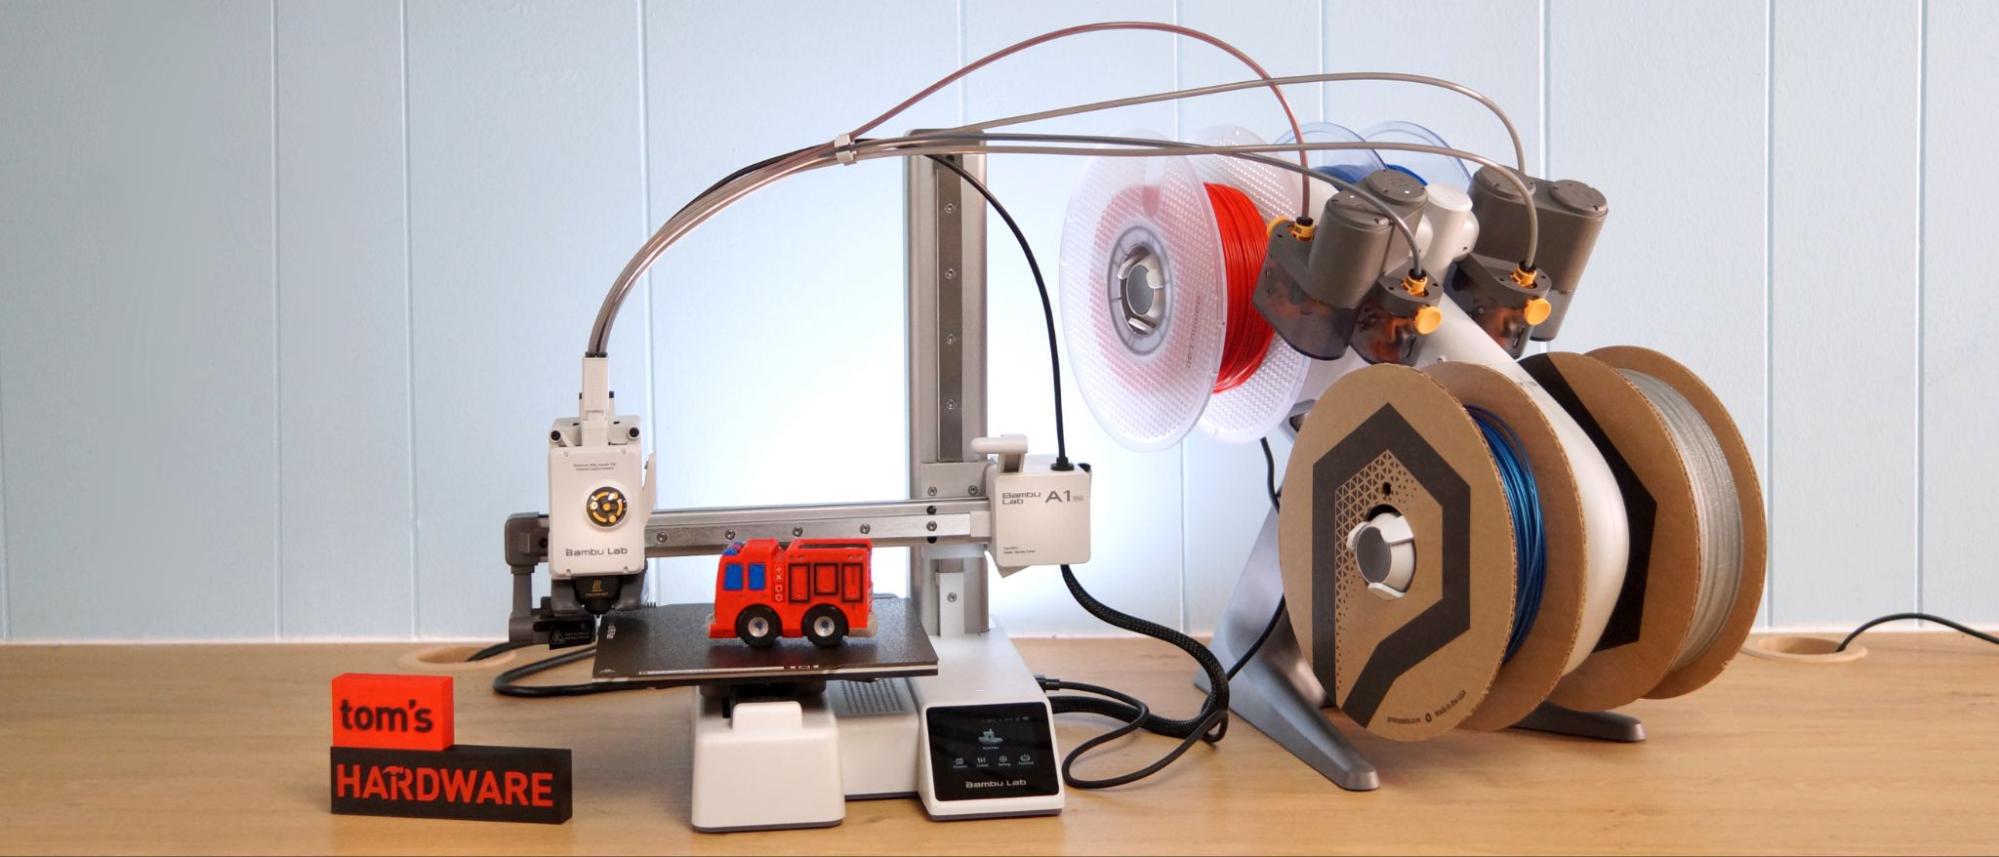 High-Quality 3D Printer: Bambu Lab A1 Mini Review - Speedy, Compact &  Simple Desktop Printing — Modern Makes